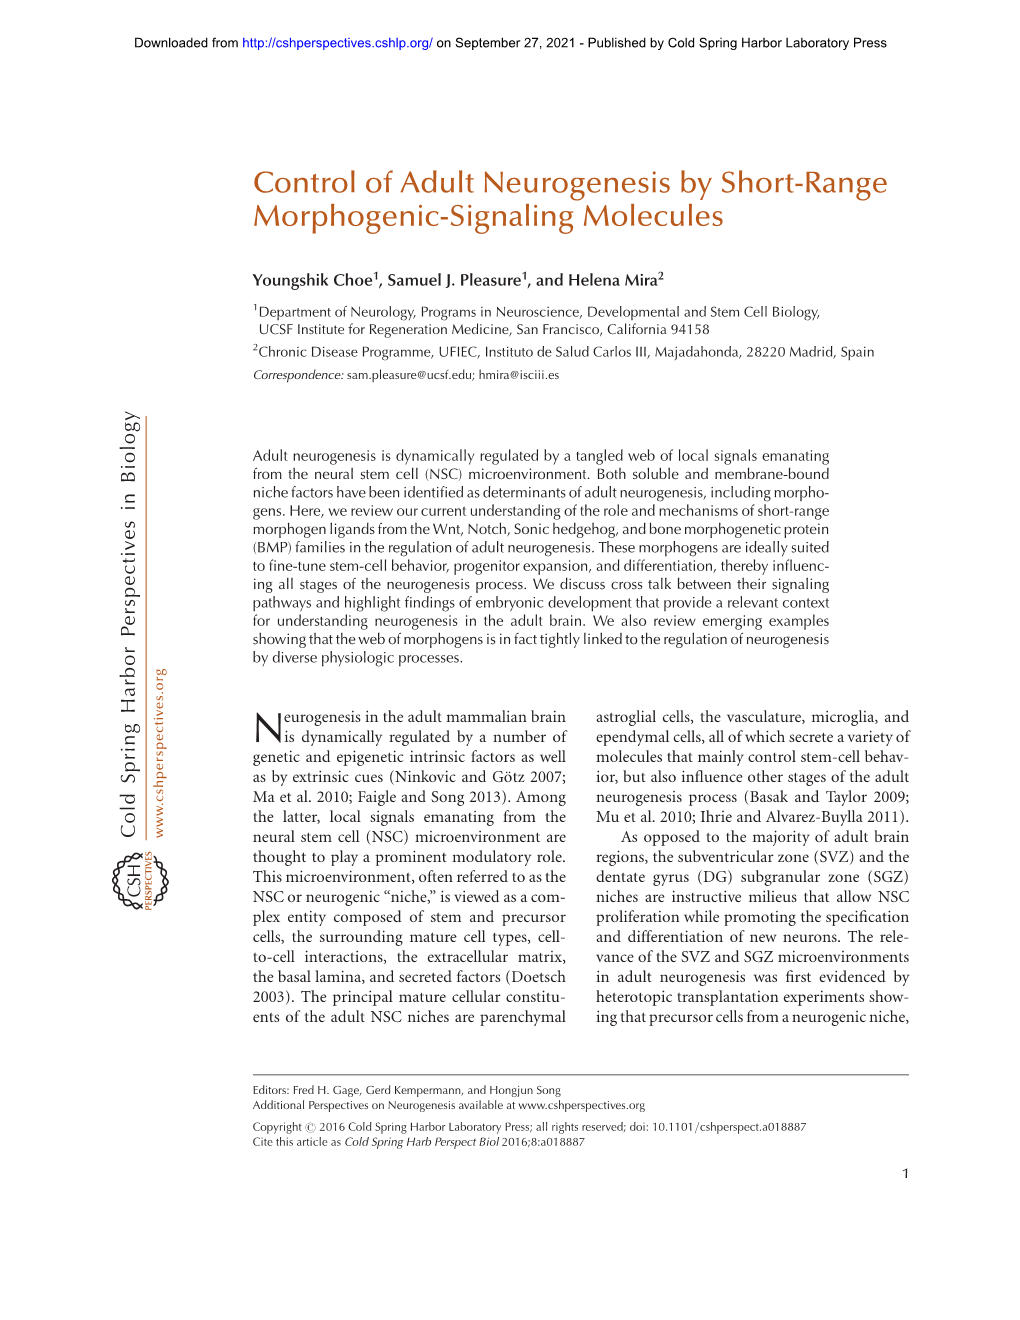 Control of Adult Neurogenesis by Short-Range Morphogenic-Signaling Molecules